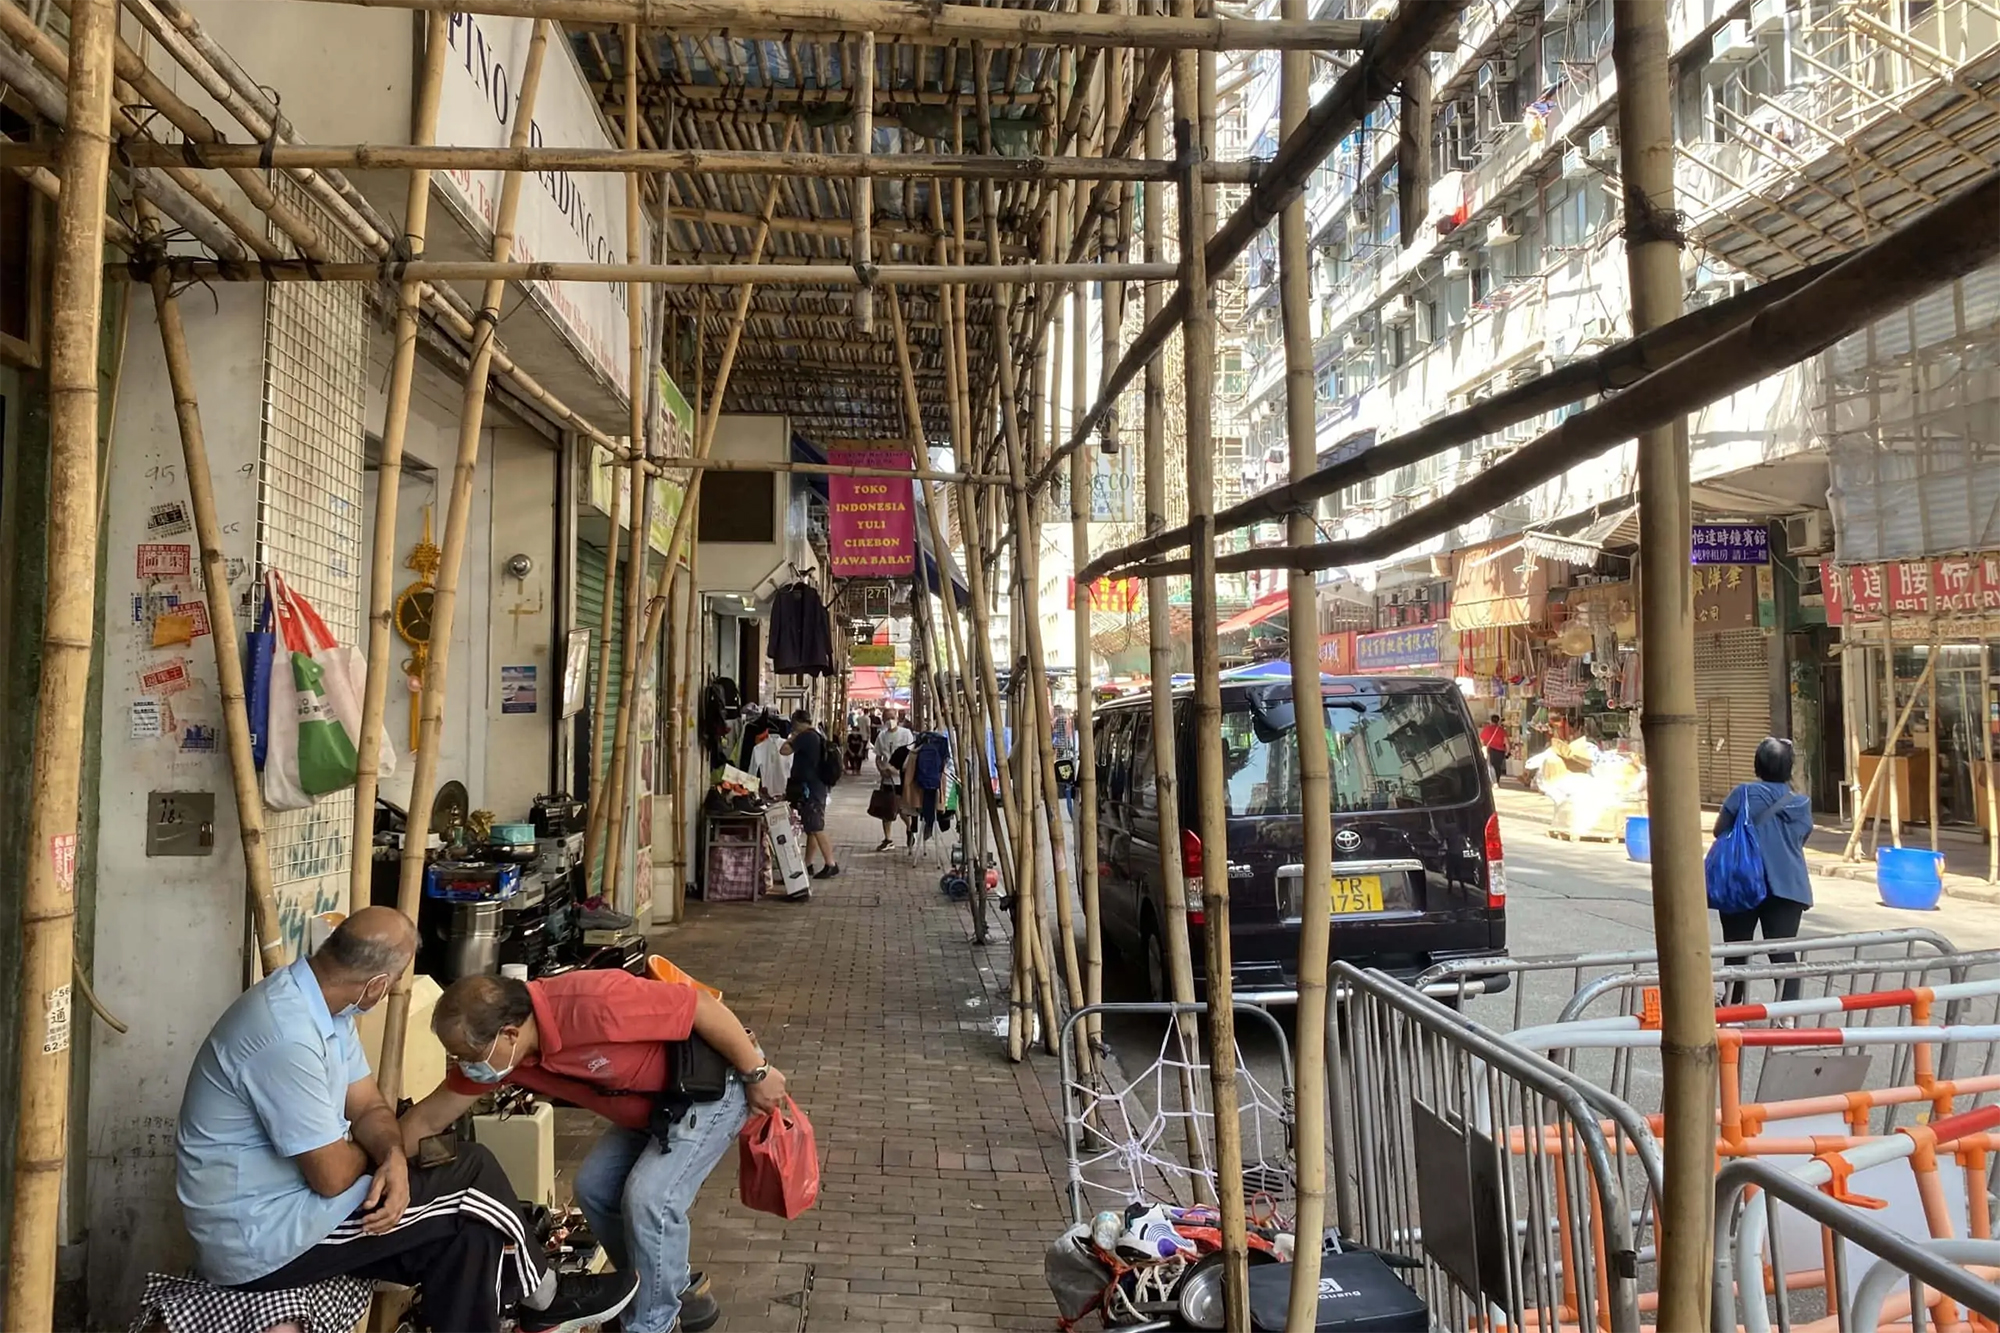 bamboo beams, standing, street